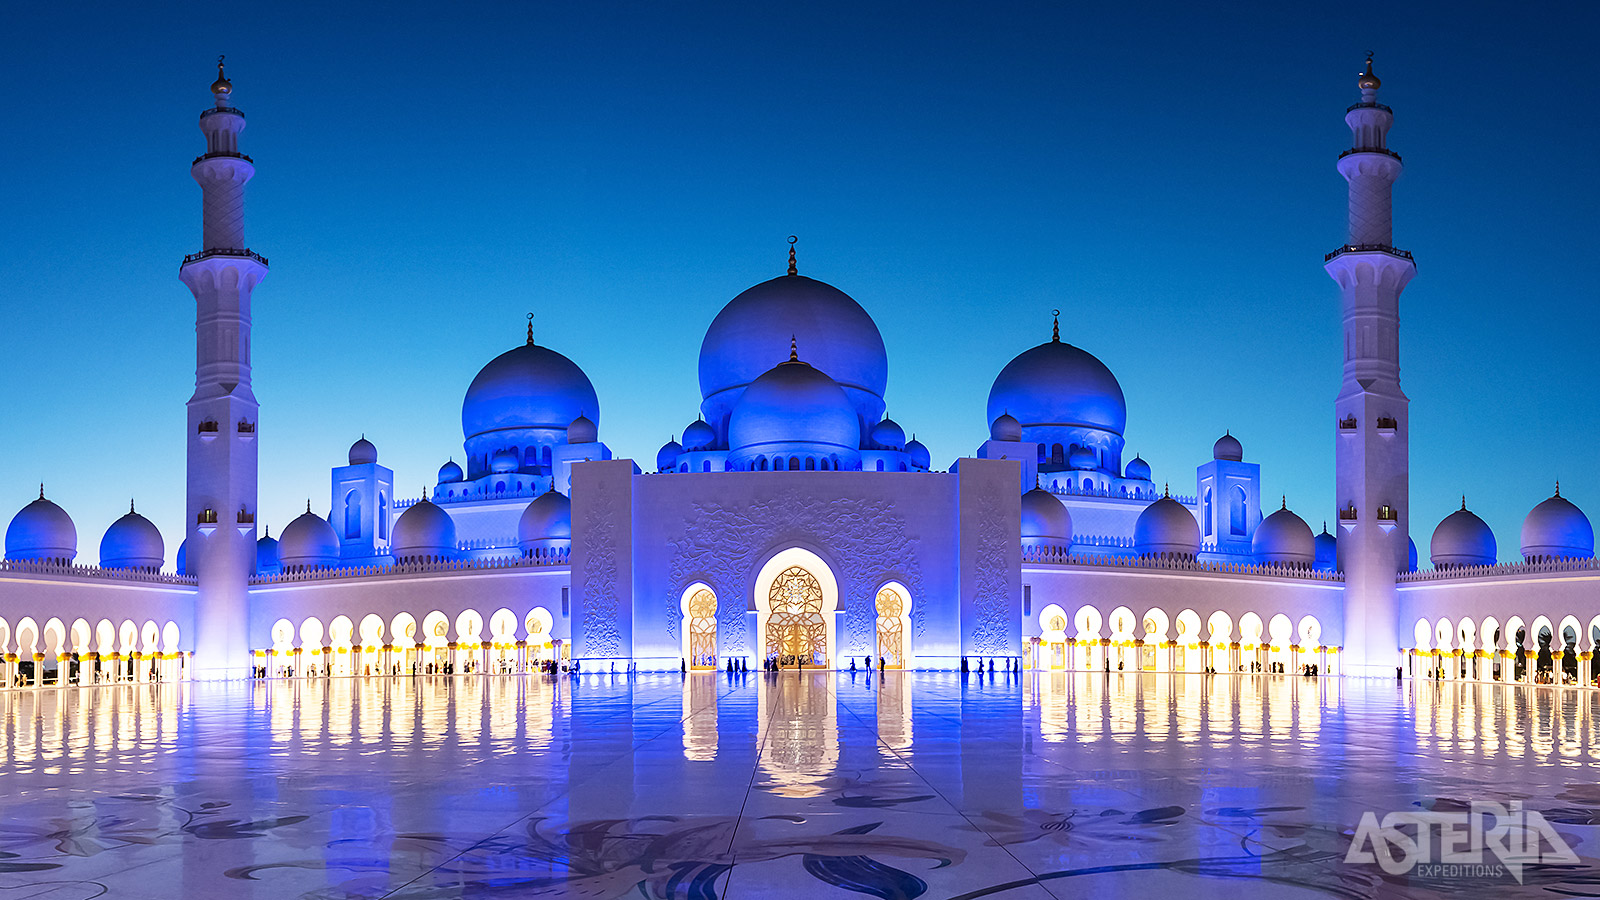 De Sjeikh Zayed Grand Moskee, één van de mooiste moskeeën van Abu Dhabi